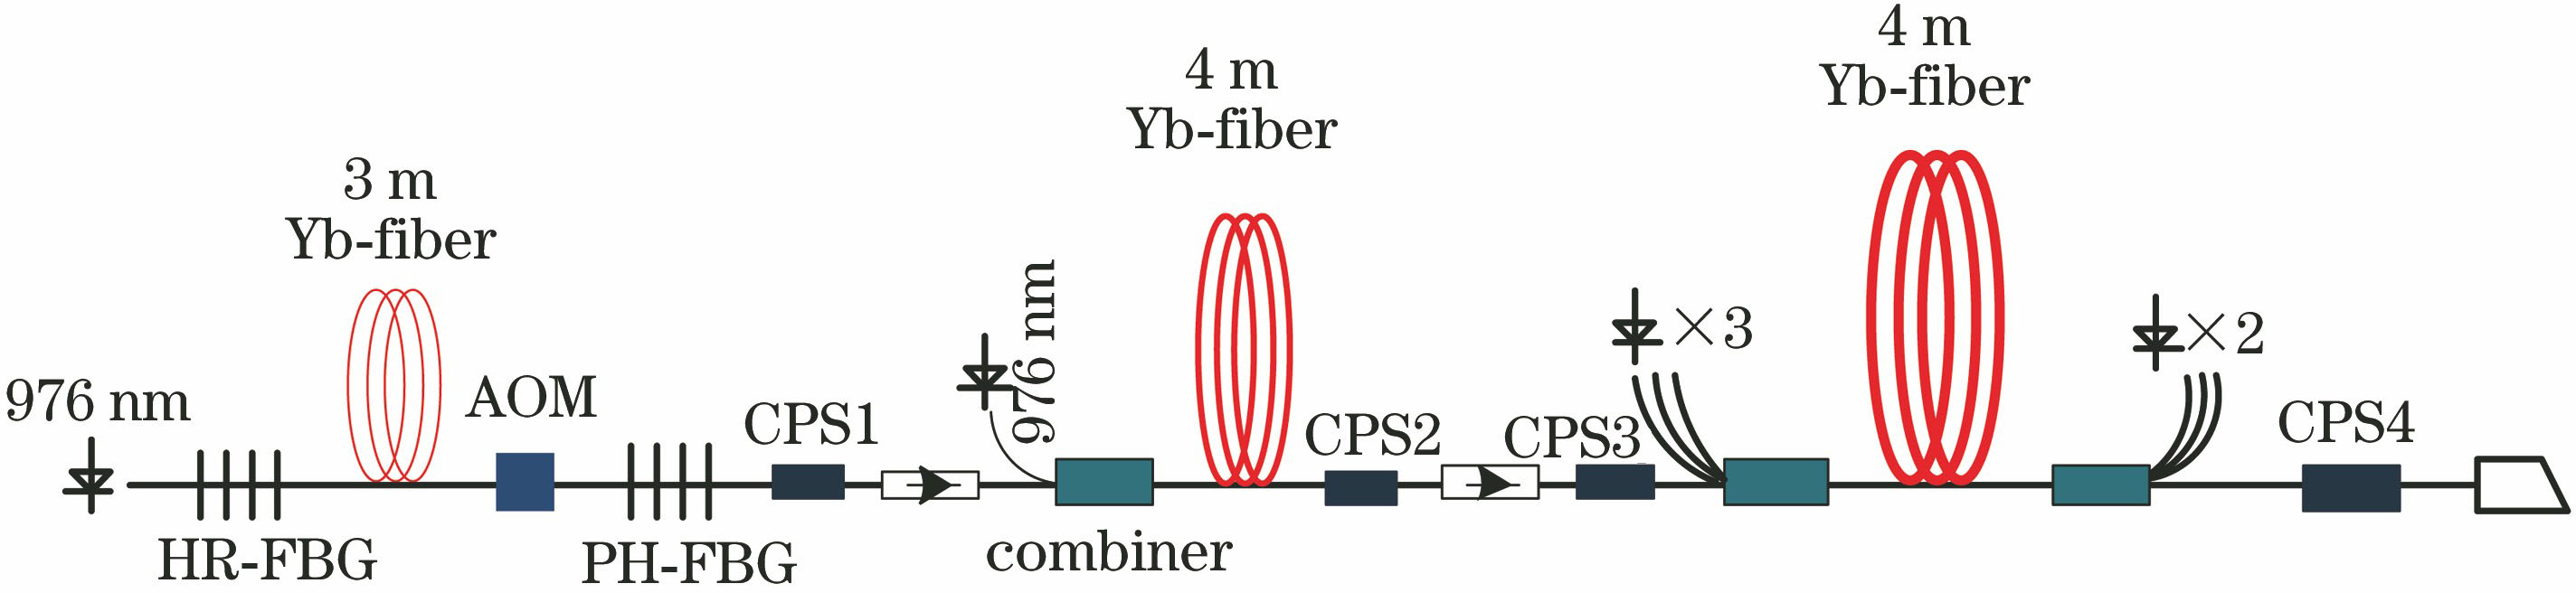 Schematic of high power nanosecond pulsed ytterbium-doped fiber laser